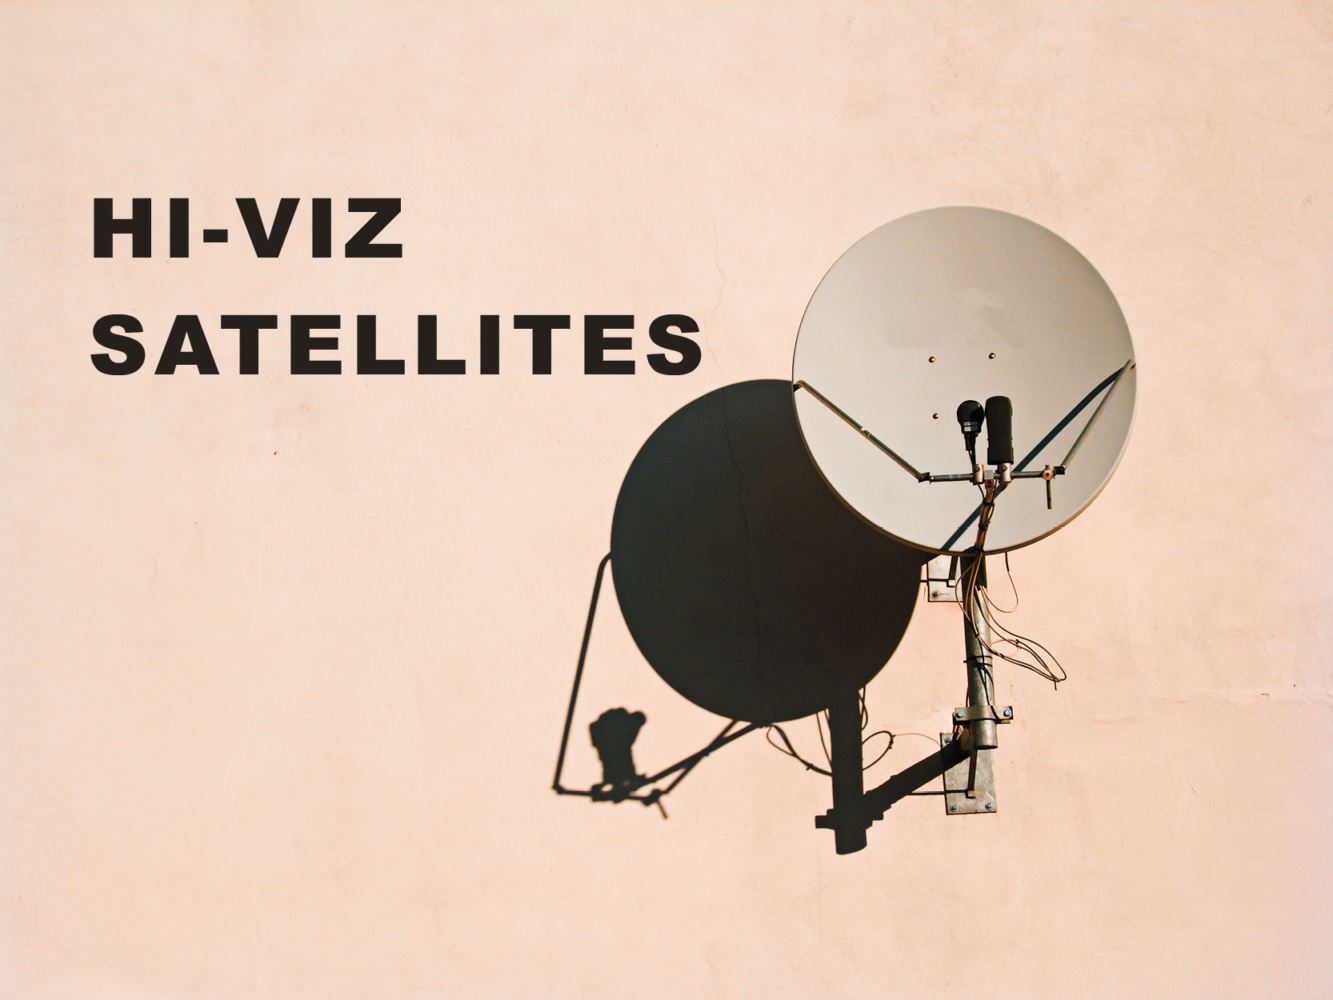 Picture of a satellite dish and text: HI-VIZ SATELLITES